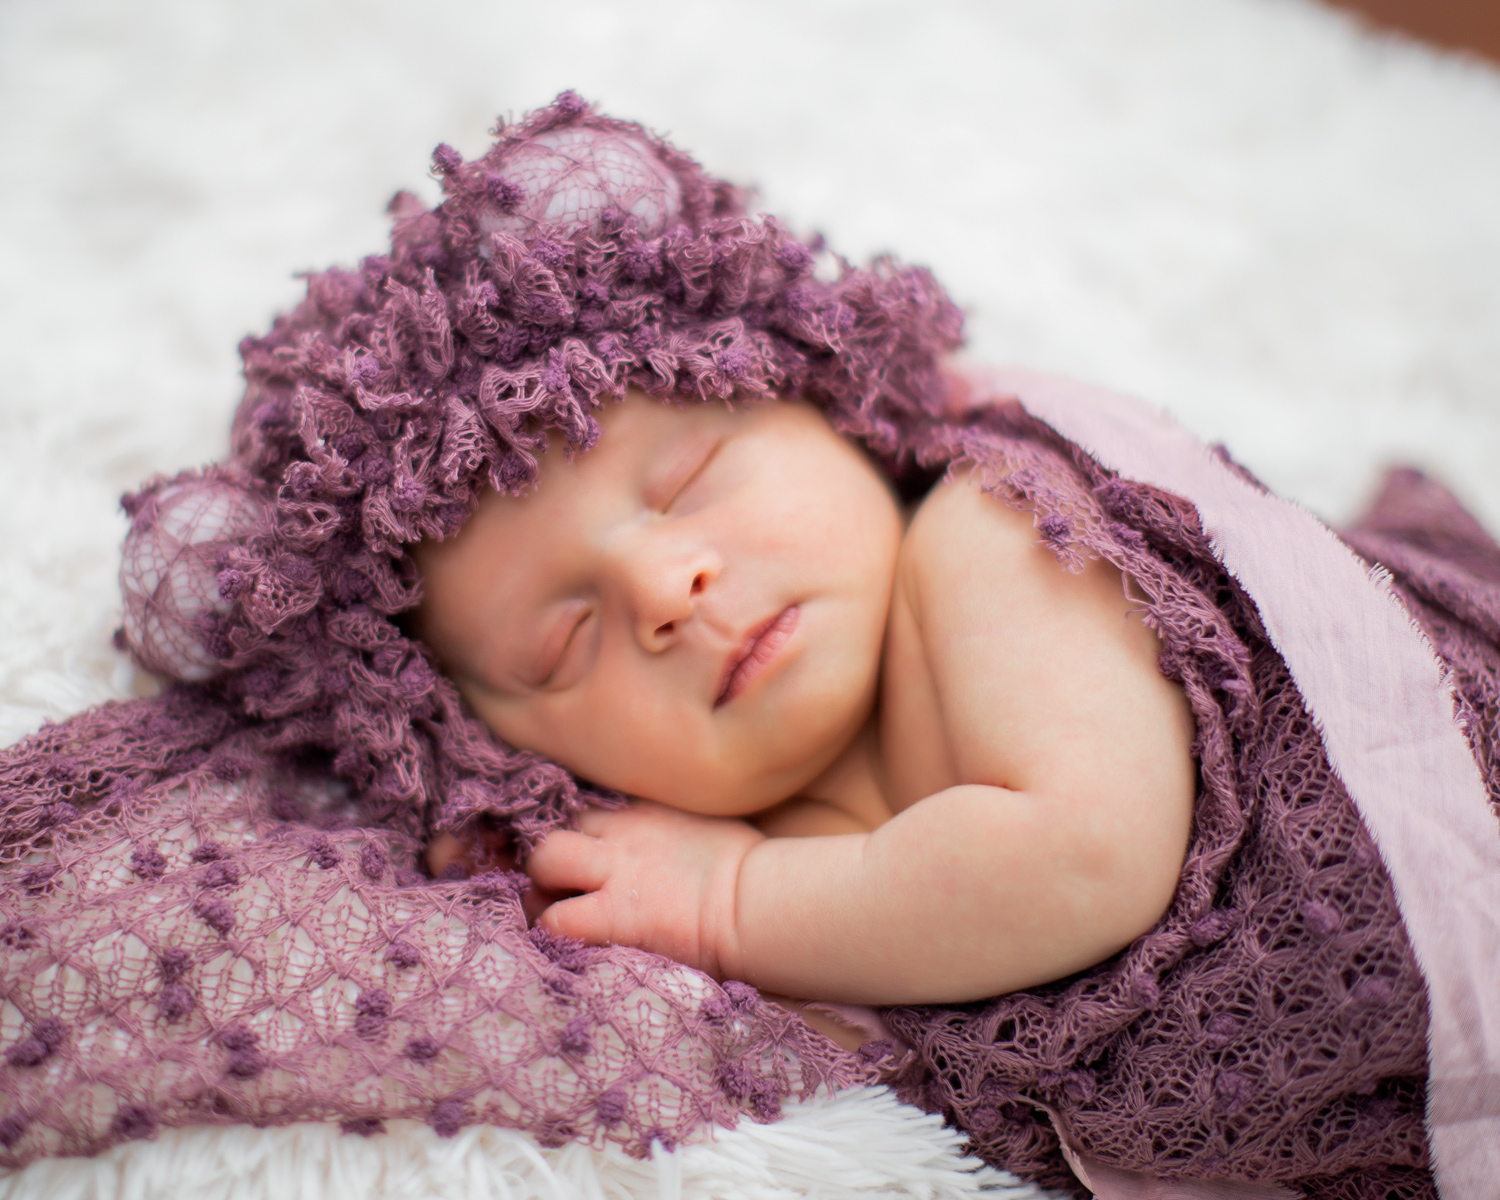 Newborn, Baby Photos & Children Portraits - Dave Zerbe Studio